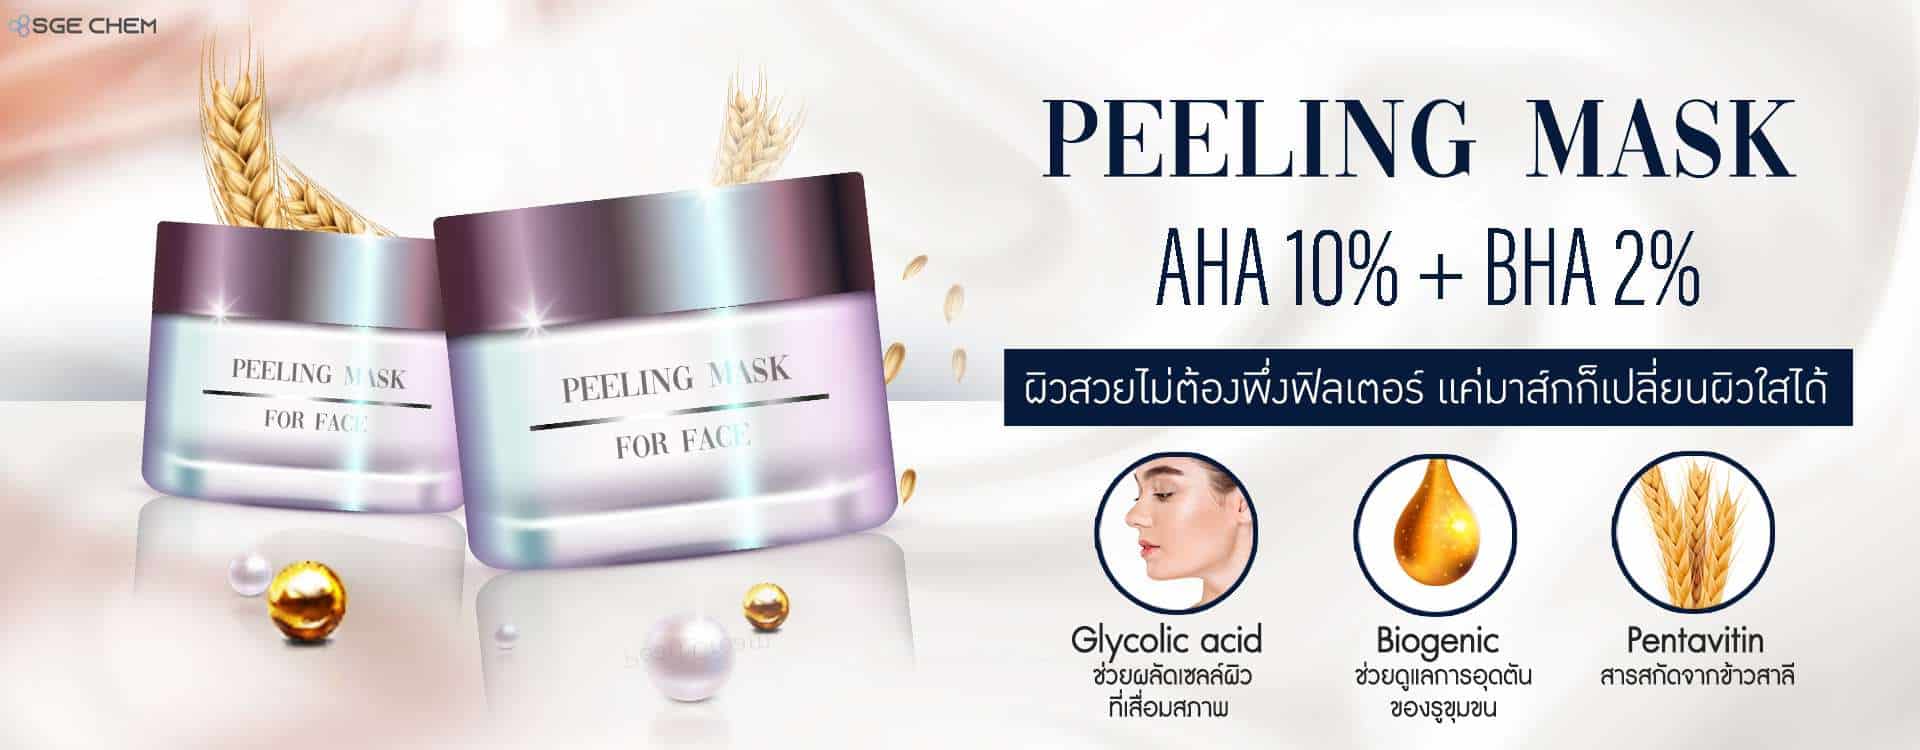 AHA 10% + BHA 2% Peeling Mask For Face v3